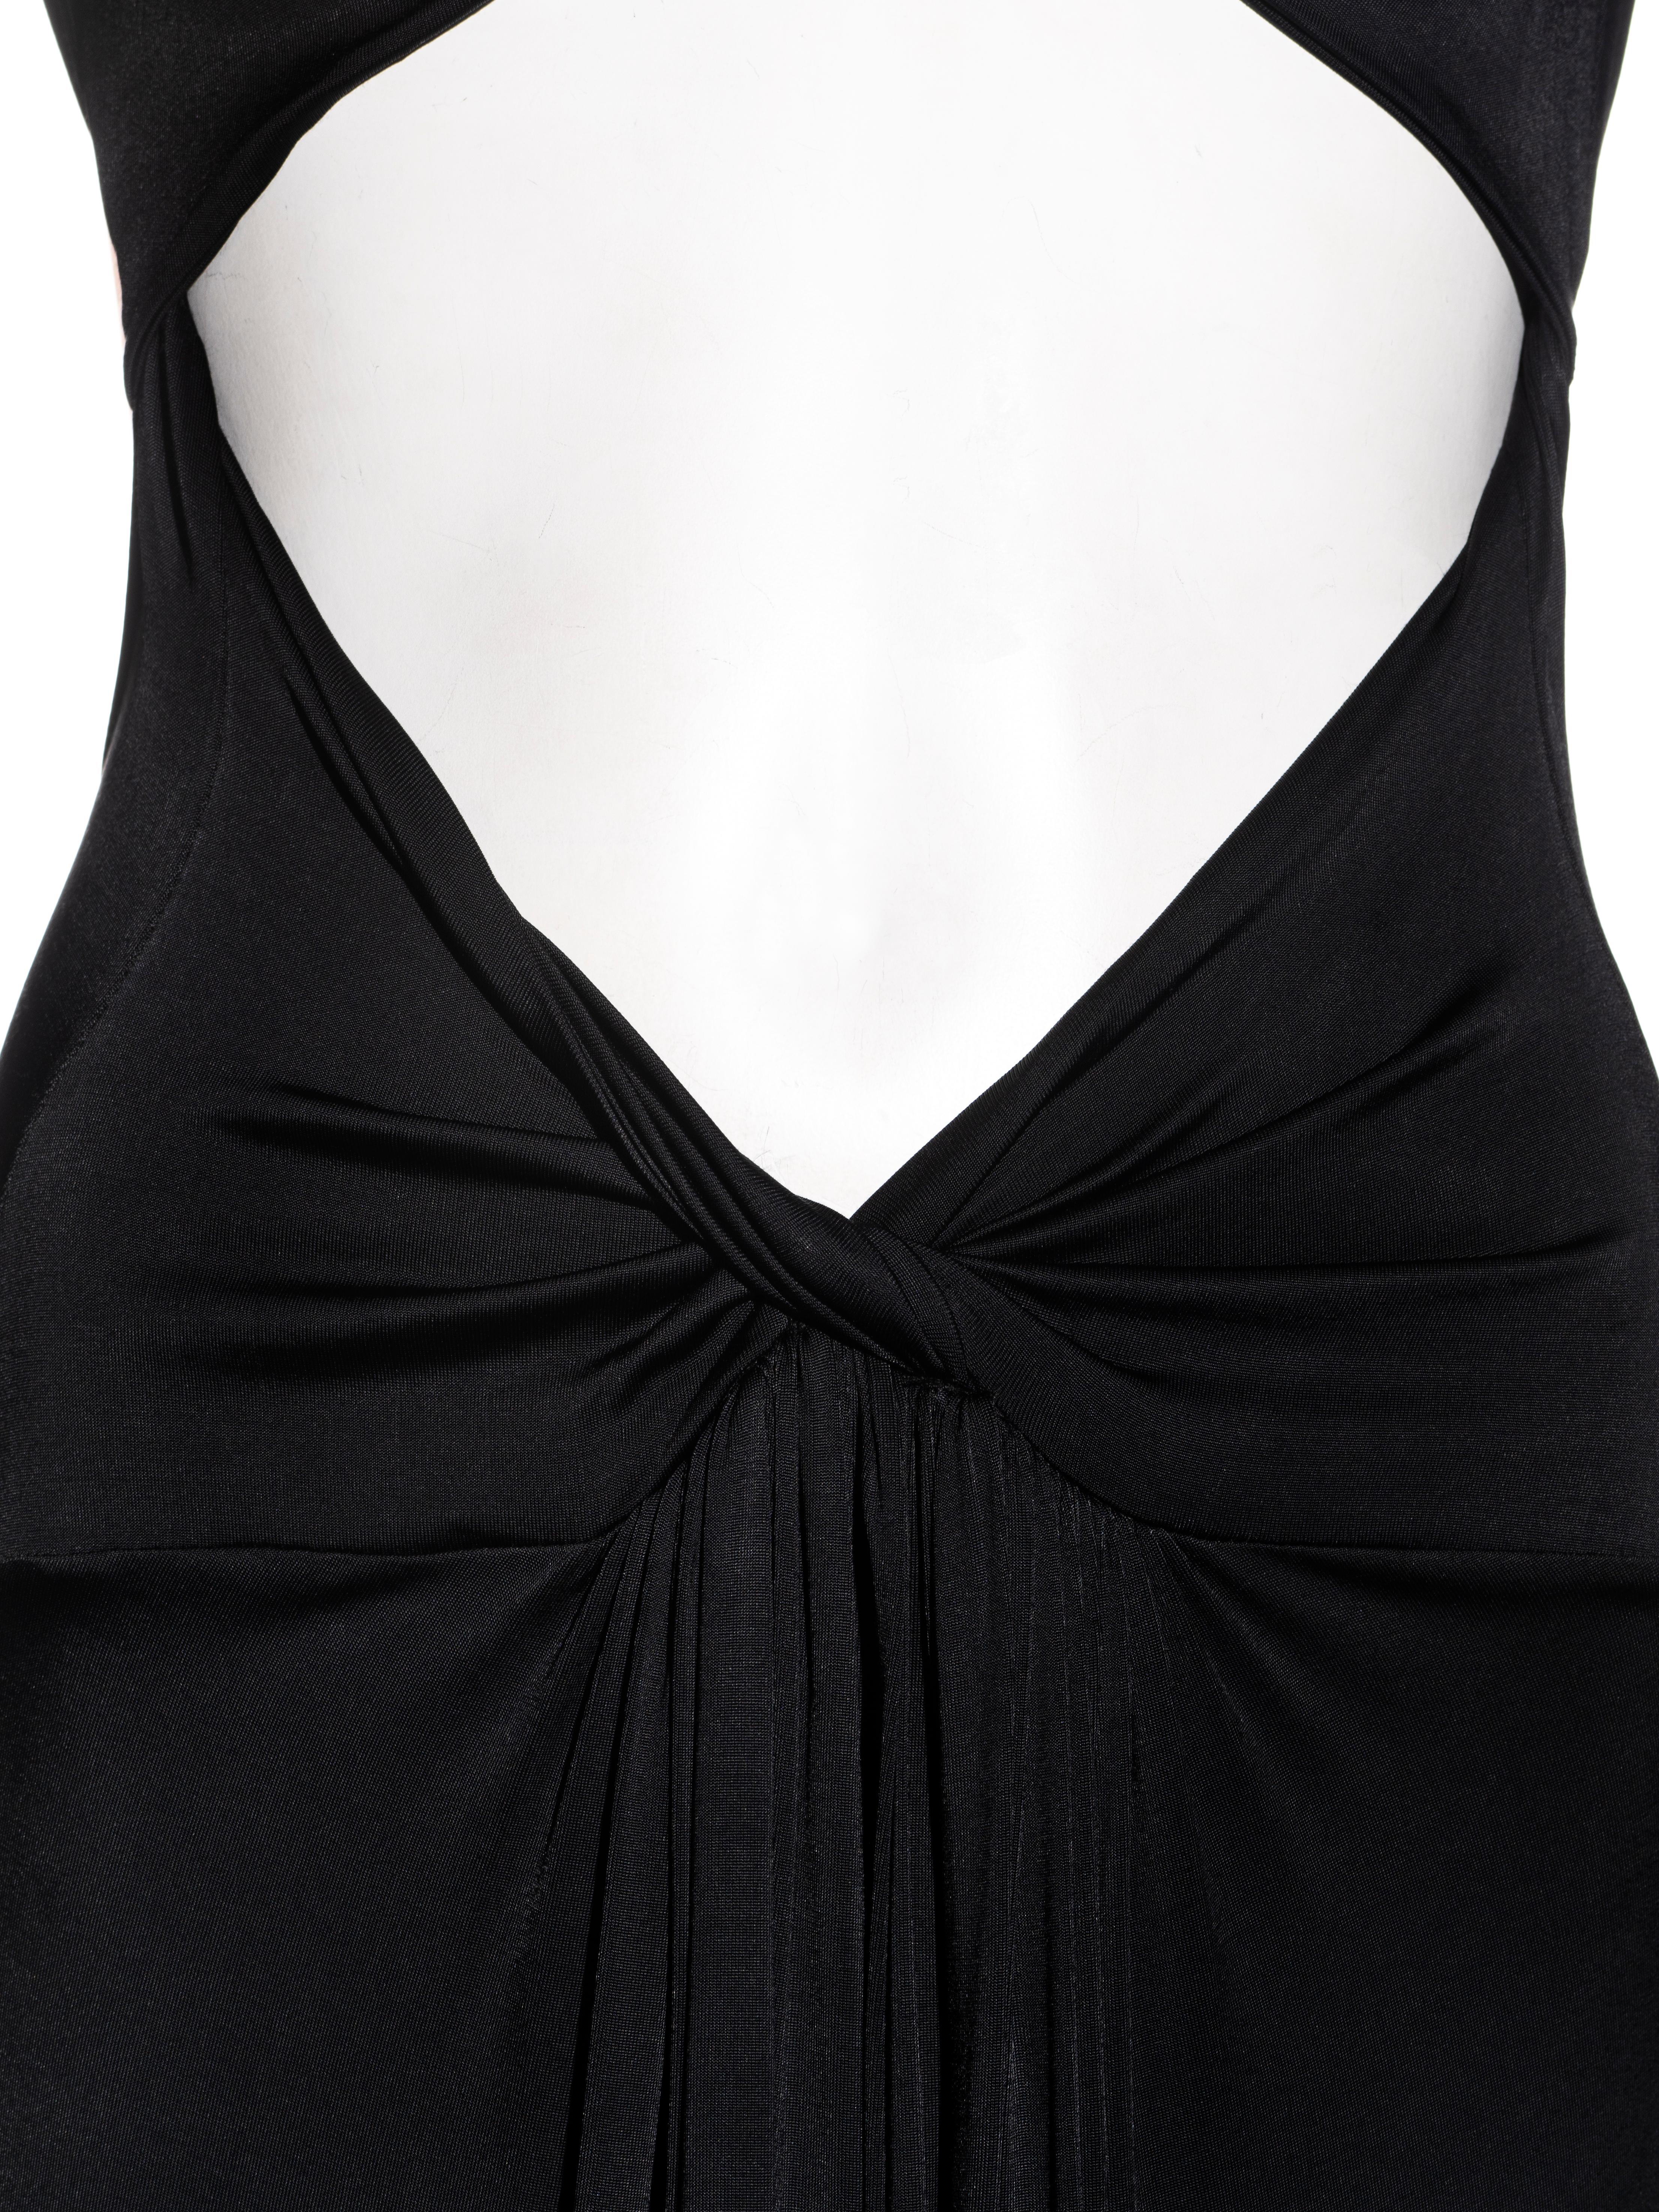 Black Roberto Cavalli black viscose dress with cut-outs, ss 2006